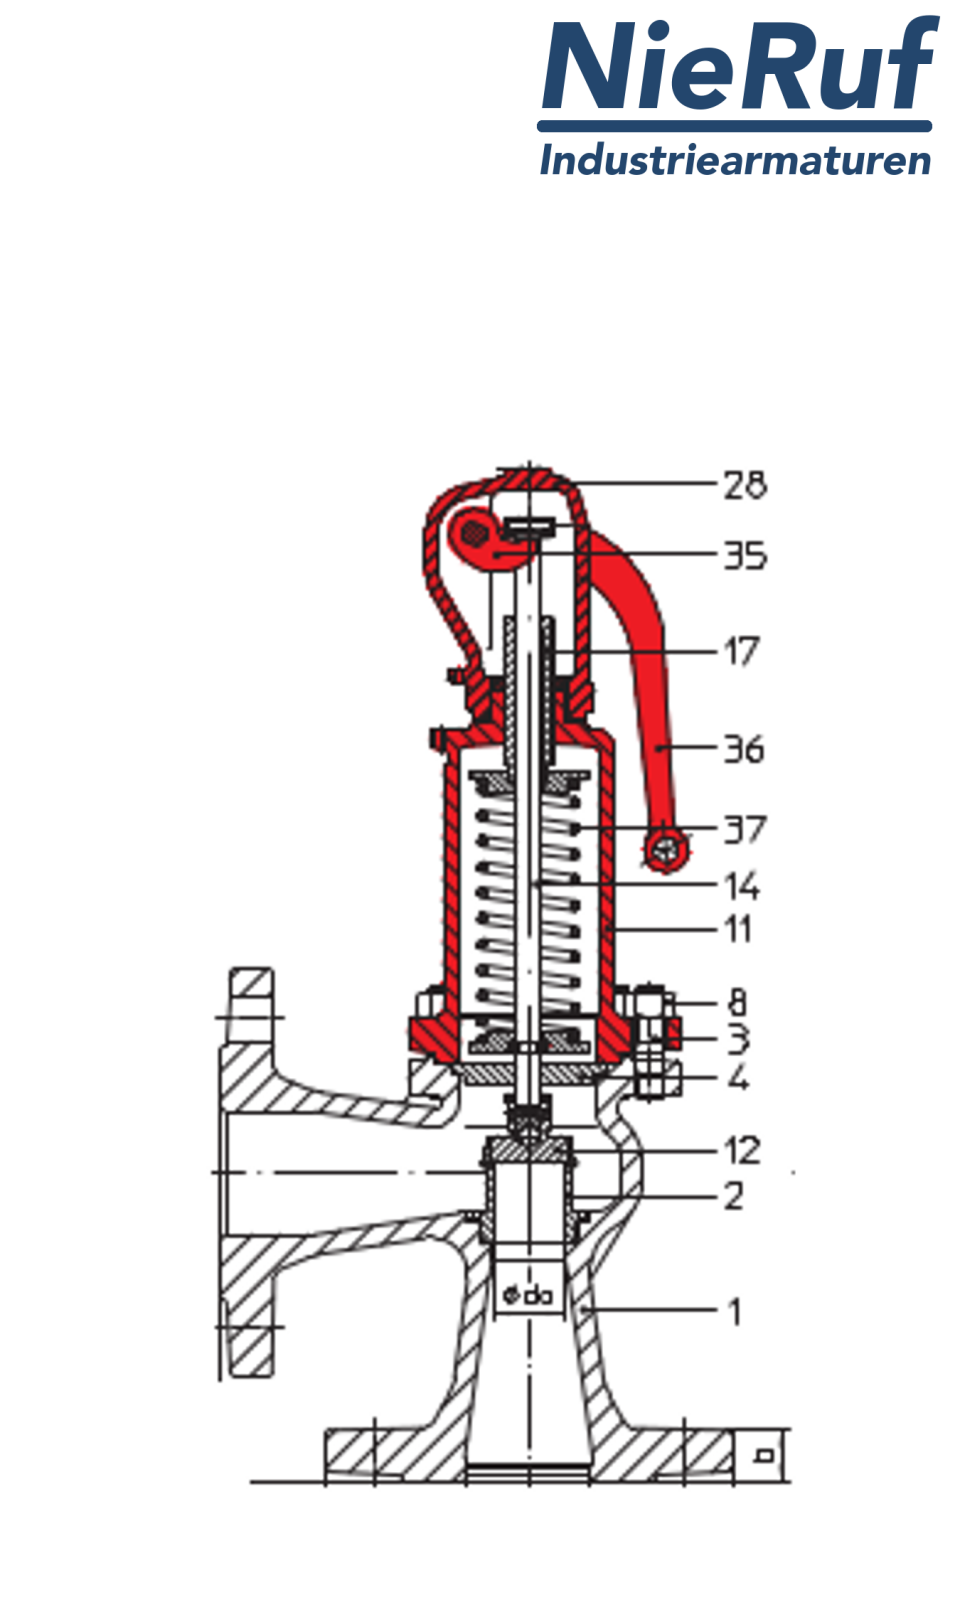 flange-safety valve DN80/DN80 SF01, cast iron EN-JL1040 FPM, with lever